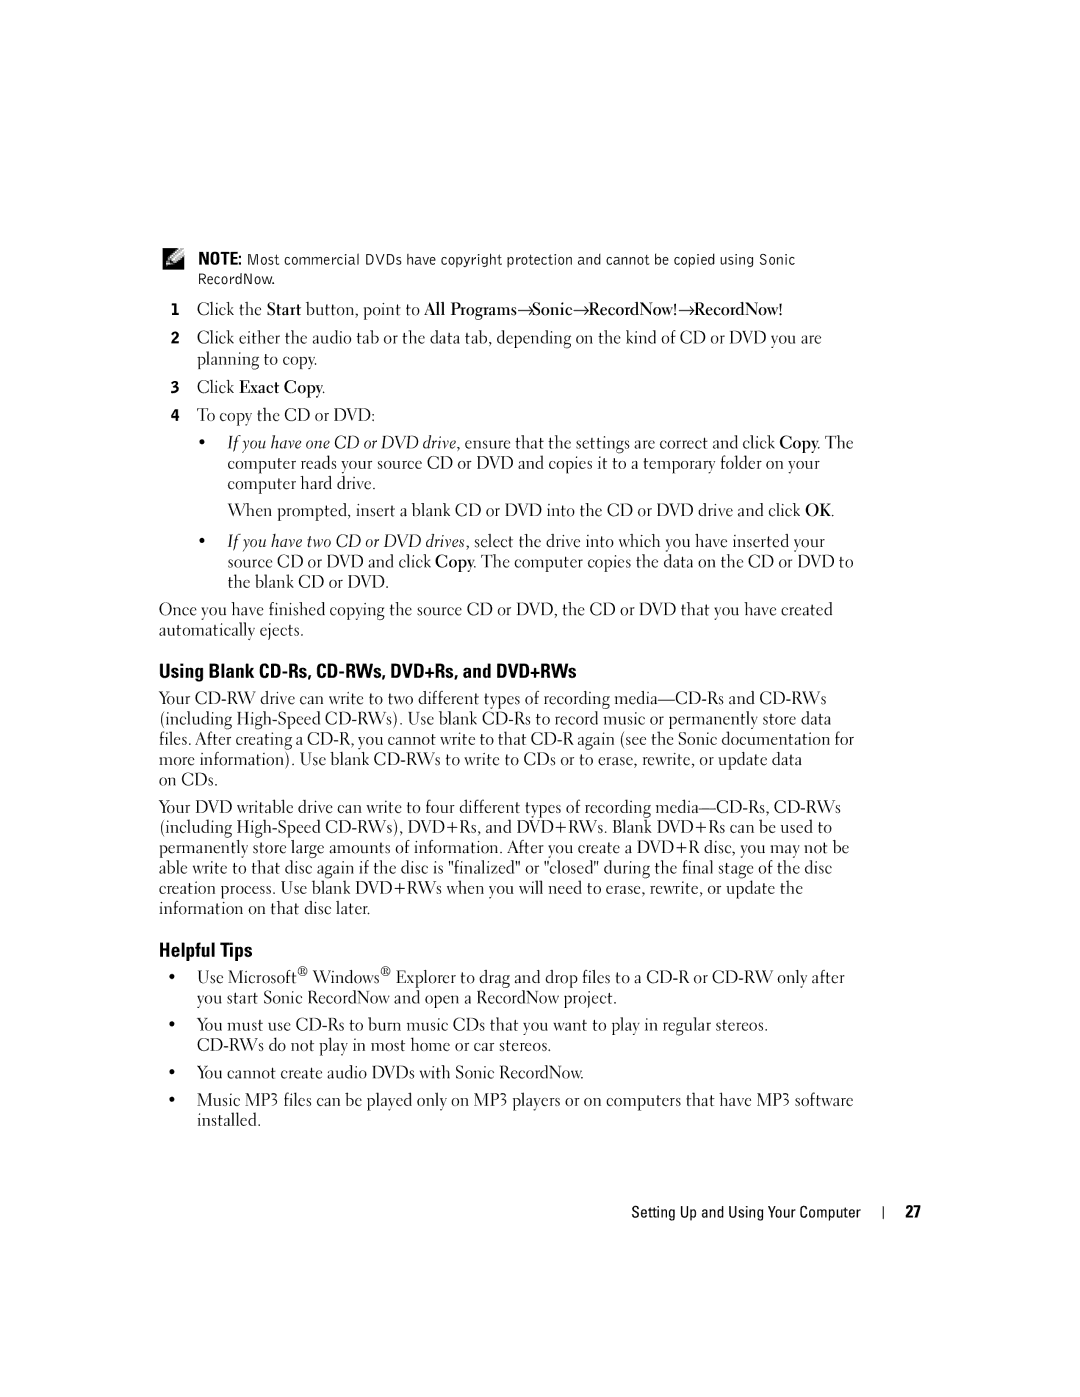 Dell XPS GEN 3 manual Using Blank CD-Rs, CD-RWs, DVD+Rs, and DVD+RWs, Helpful Tips, Click Exact Copy 